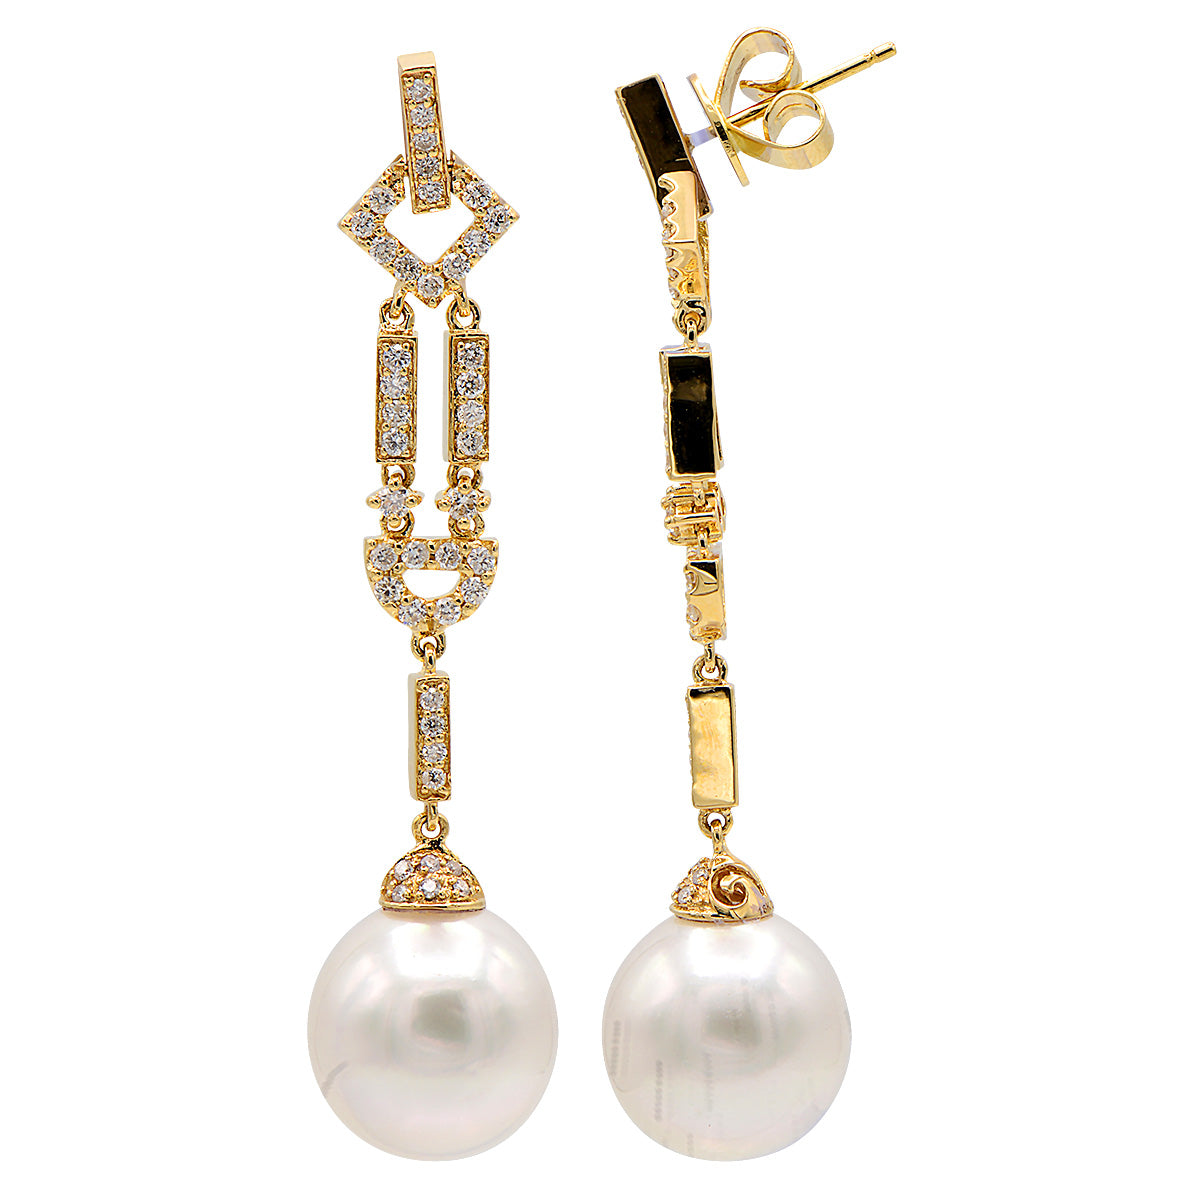 18KY White South Sea Pearl Earrings, 12-13mm